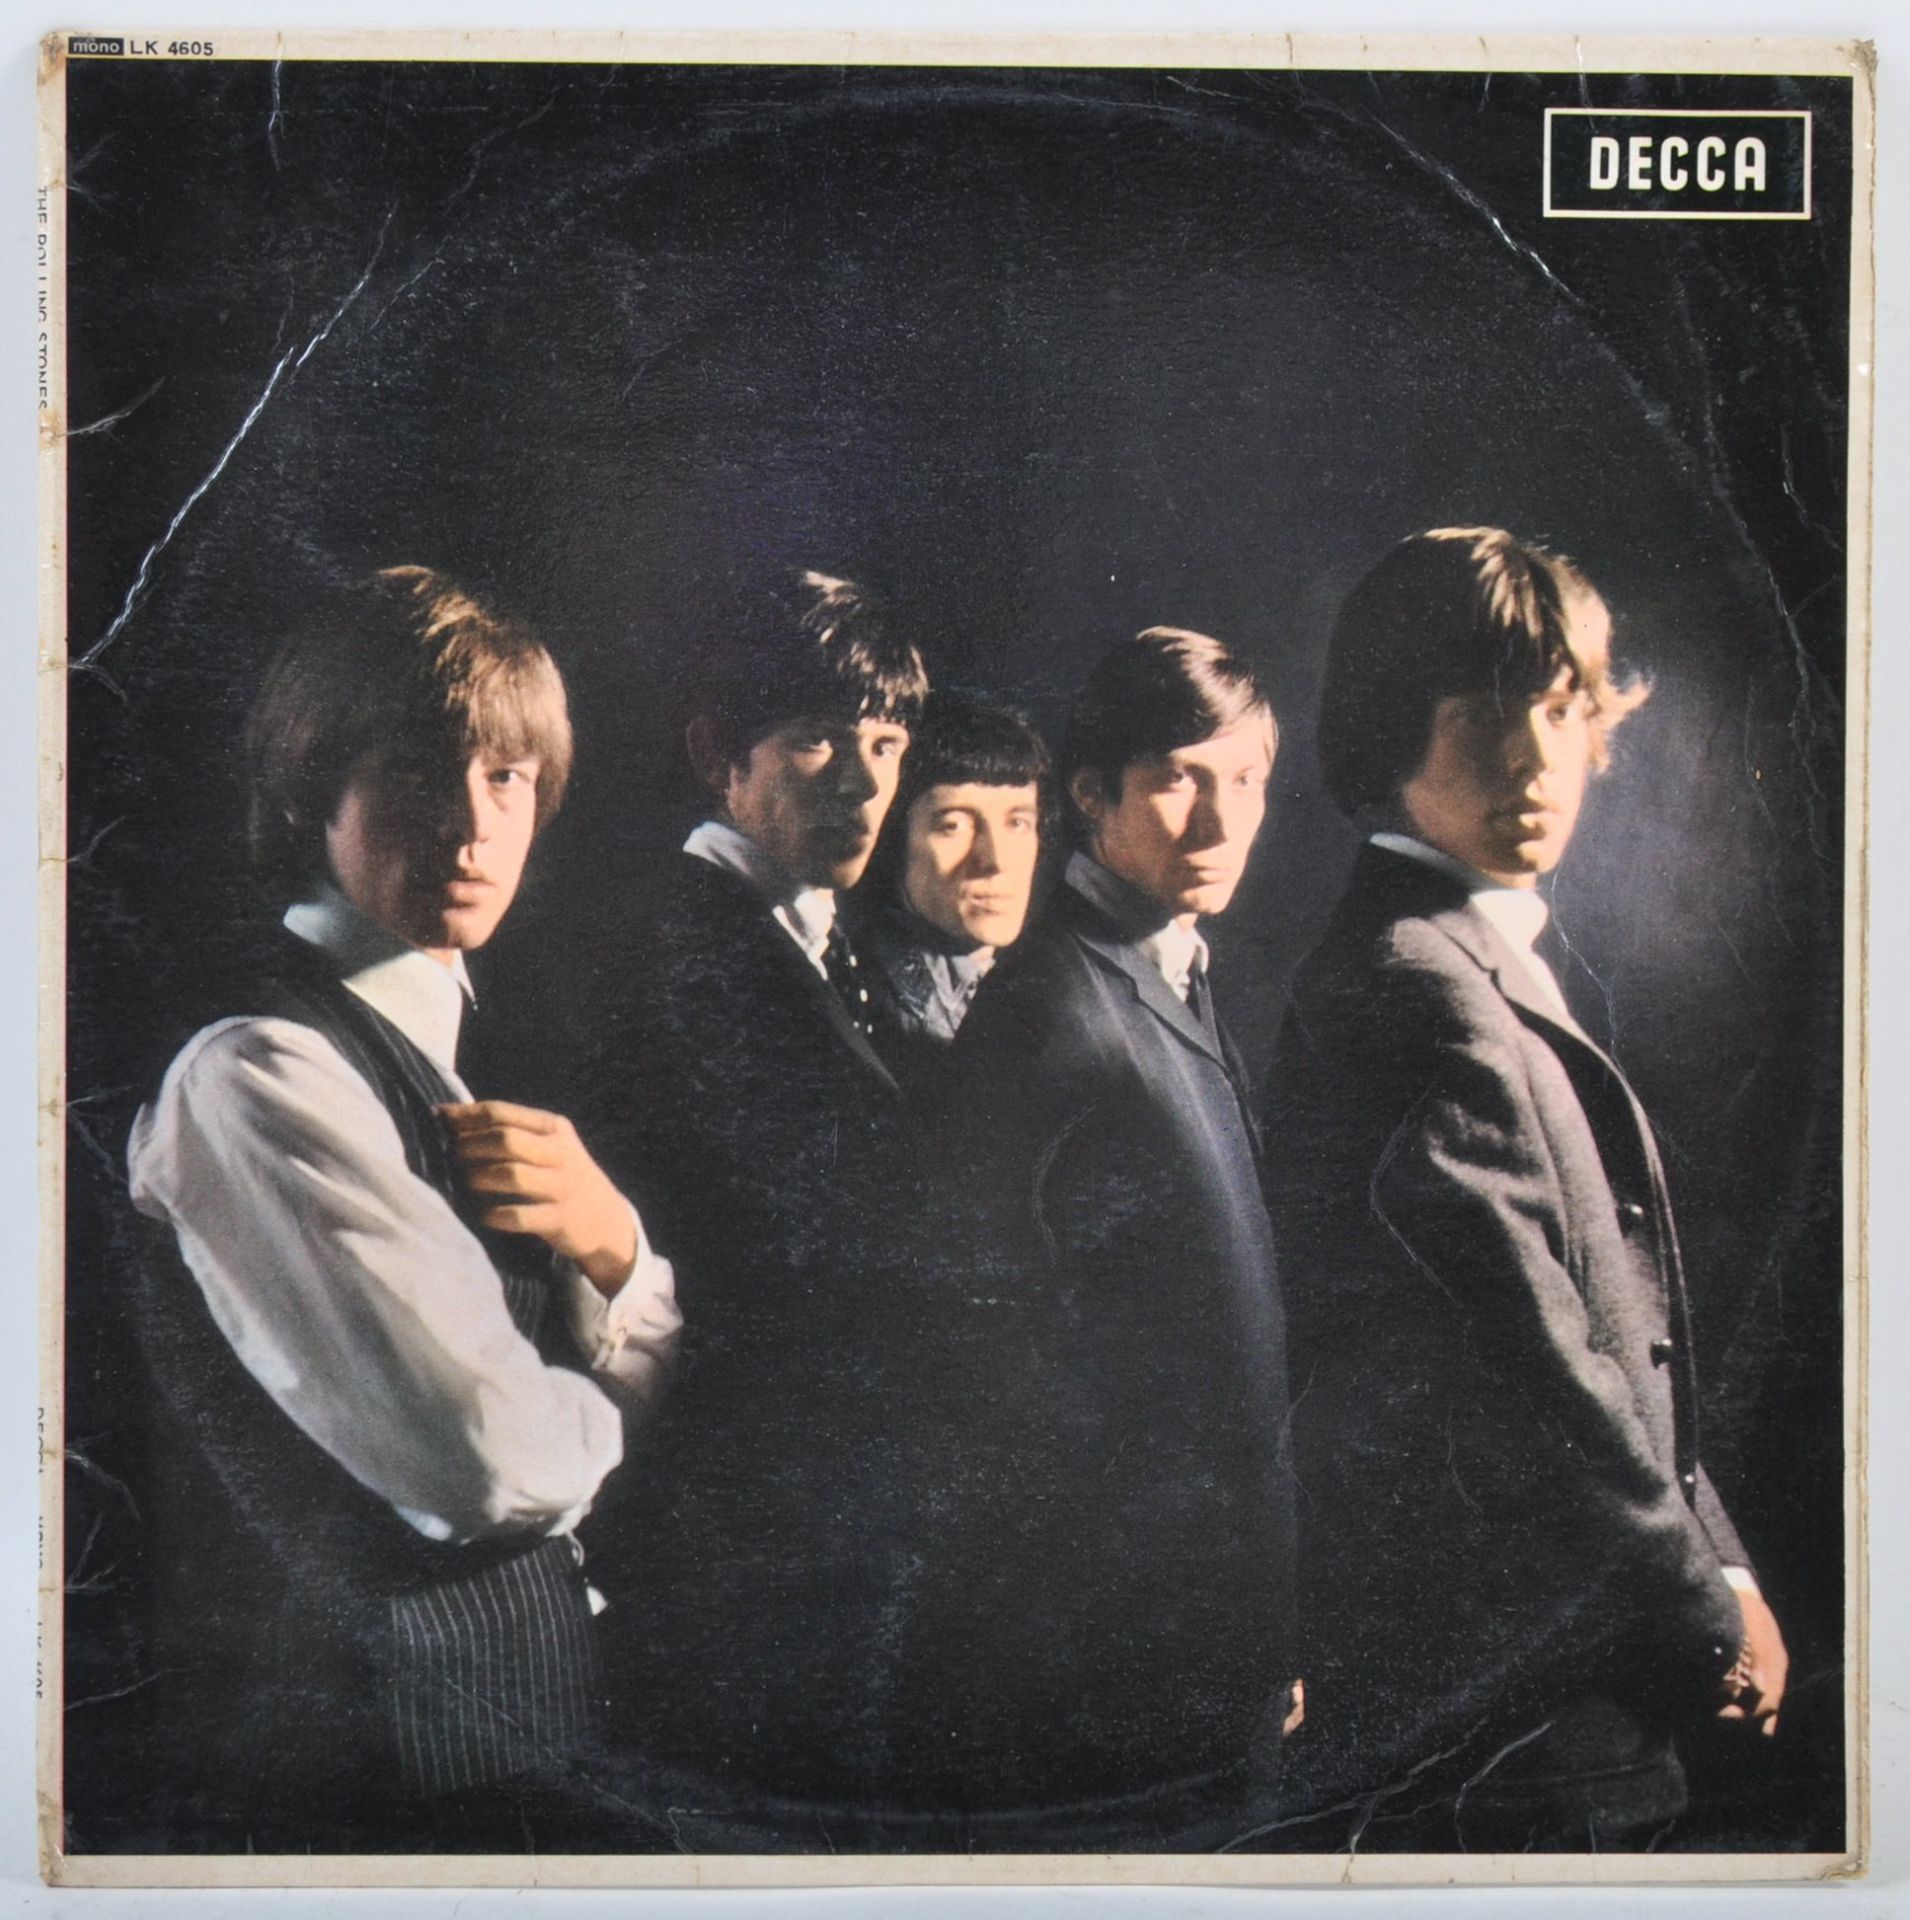 THE ROLLING STONES FIRST ALBUM - 1964 DECCA RELEASE